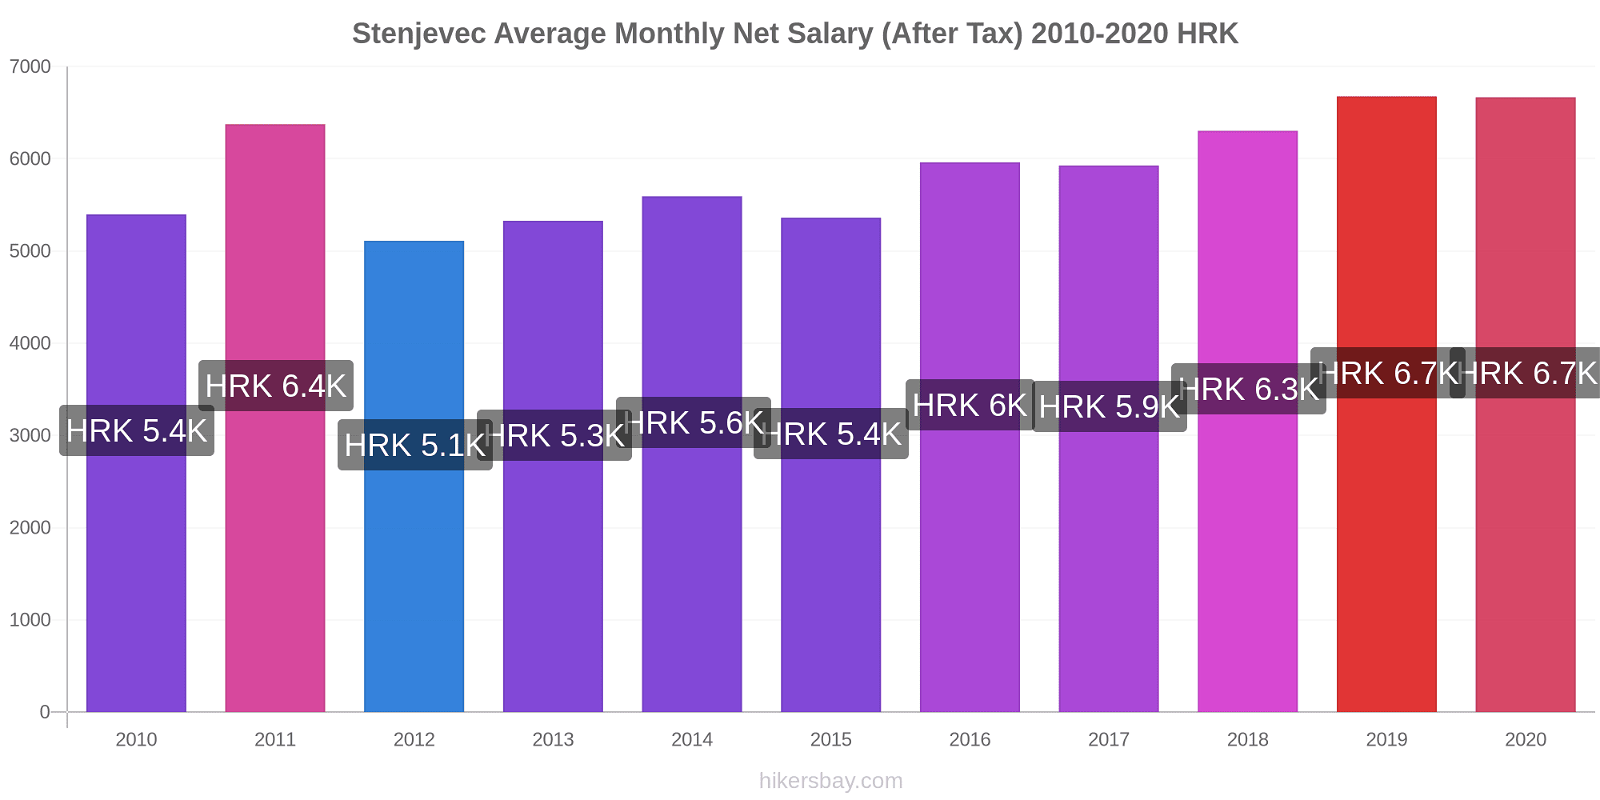 Stenjevec price changes Average Monthly Net Salary (After Tax) hikersbay.com